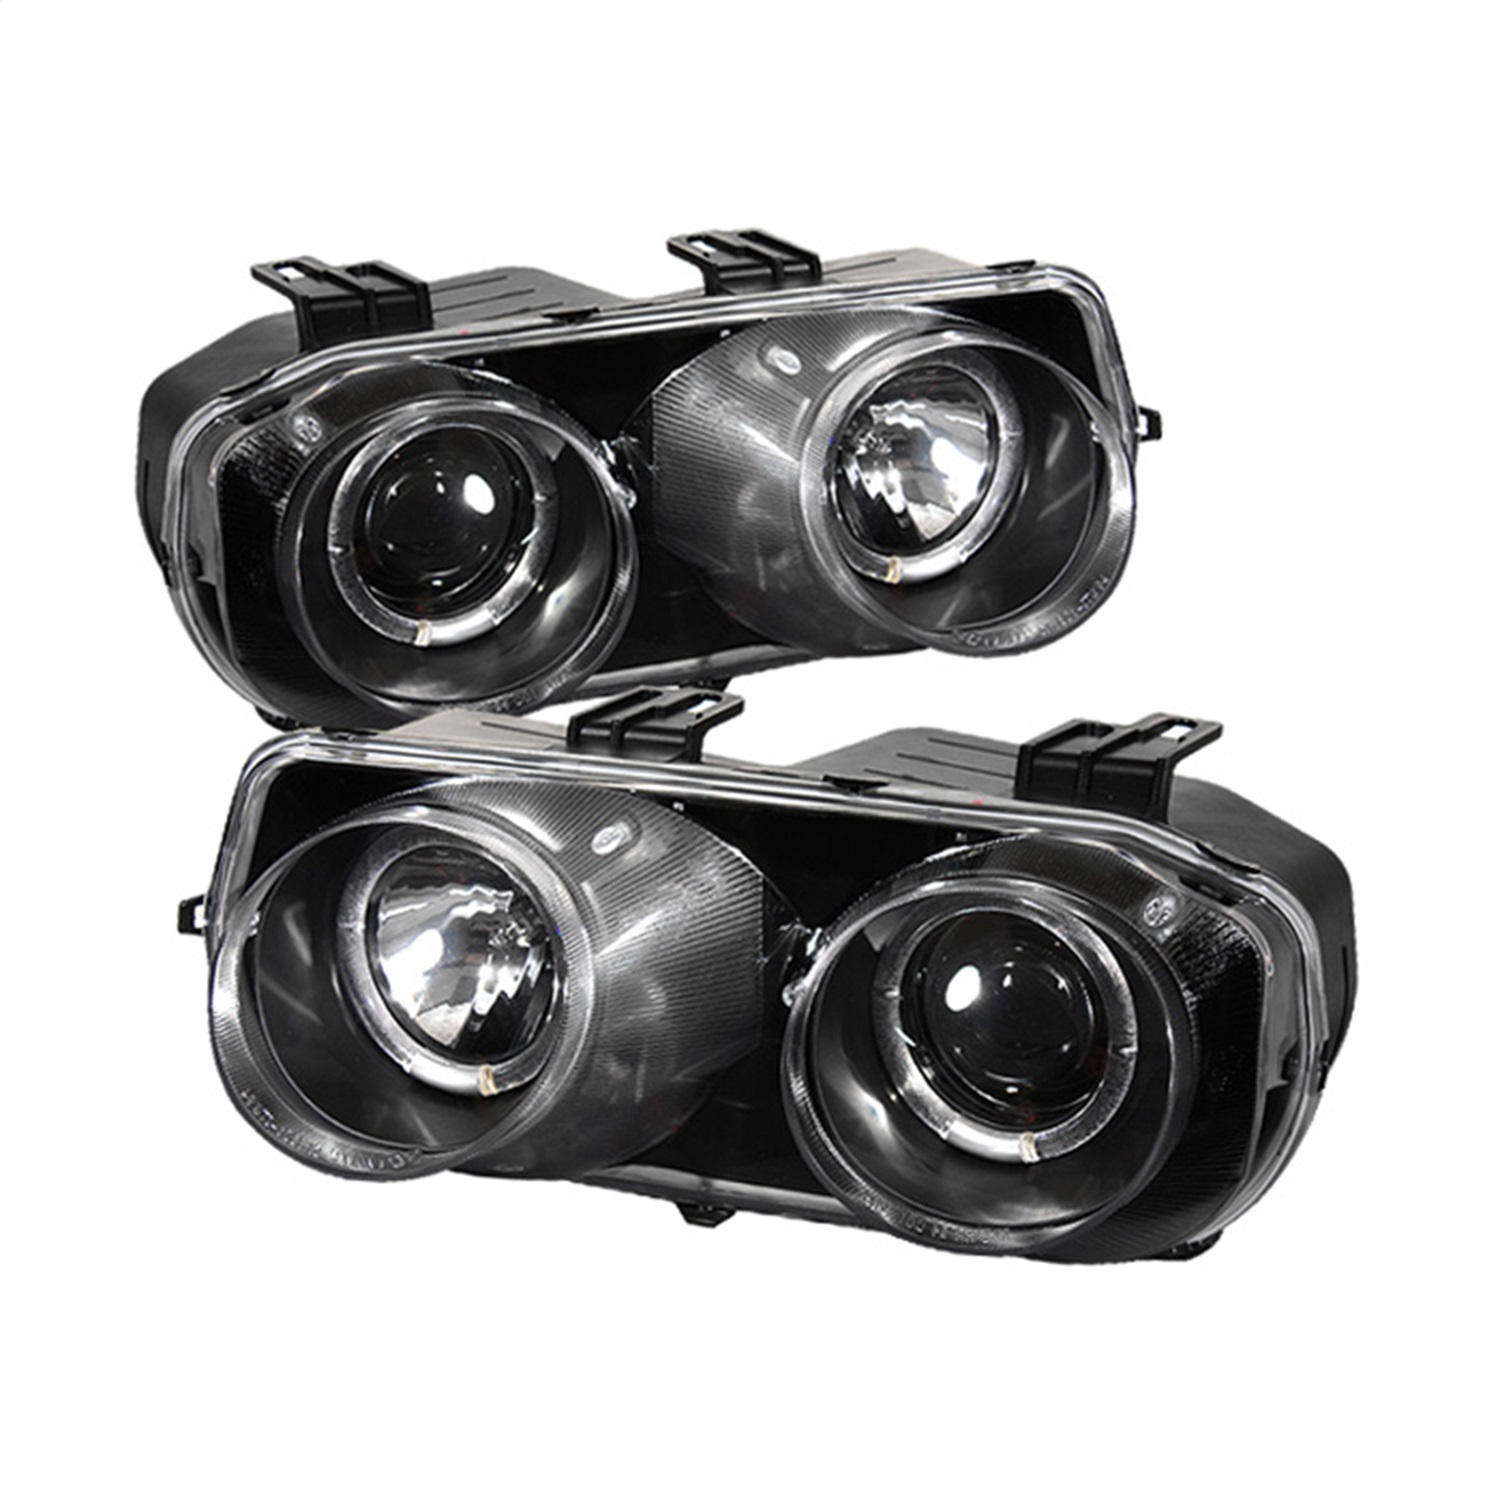 Spyder Auto 5008671 Halo Projector Headlights Fits 94-97 Integra